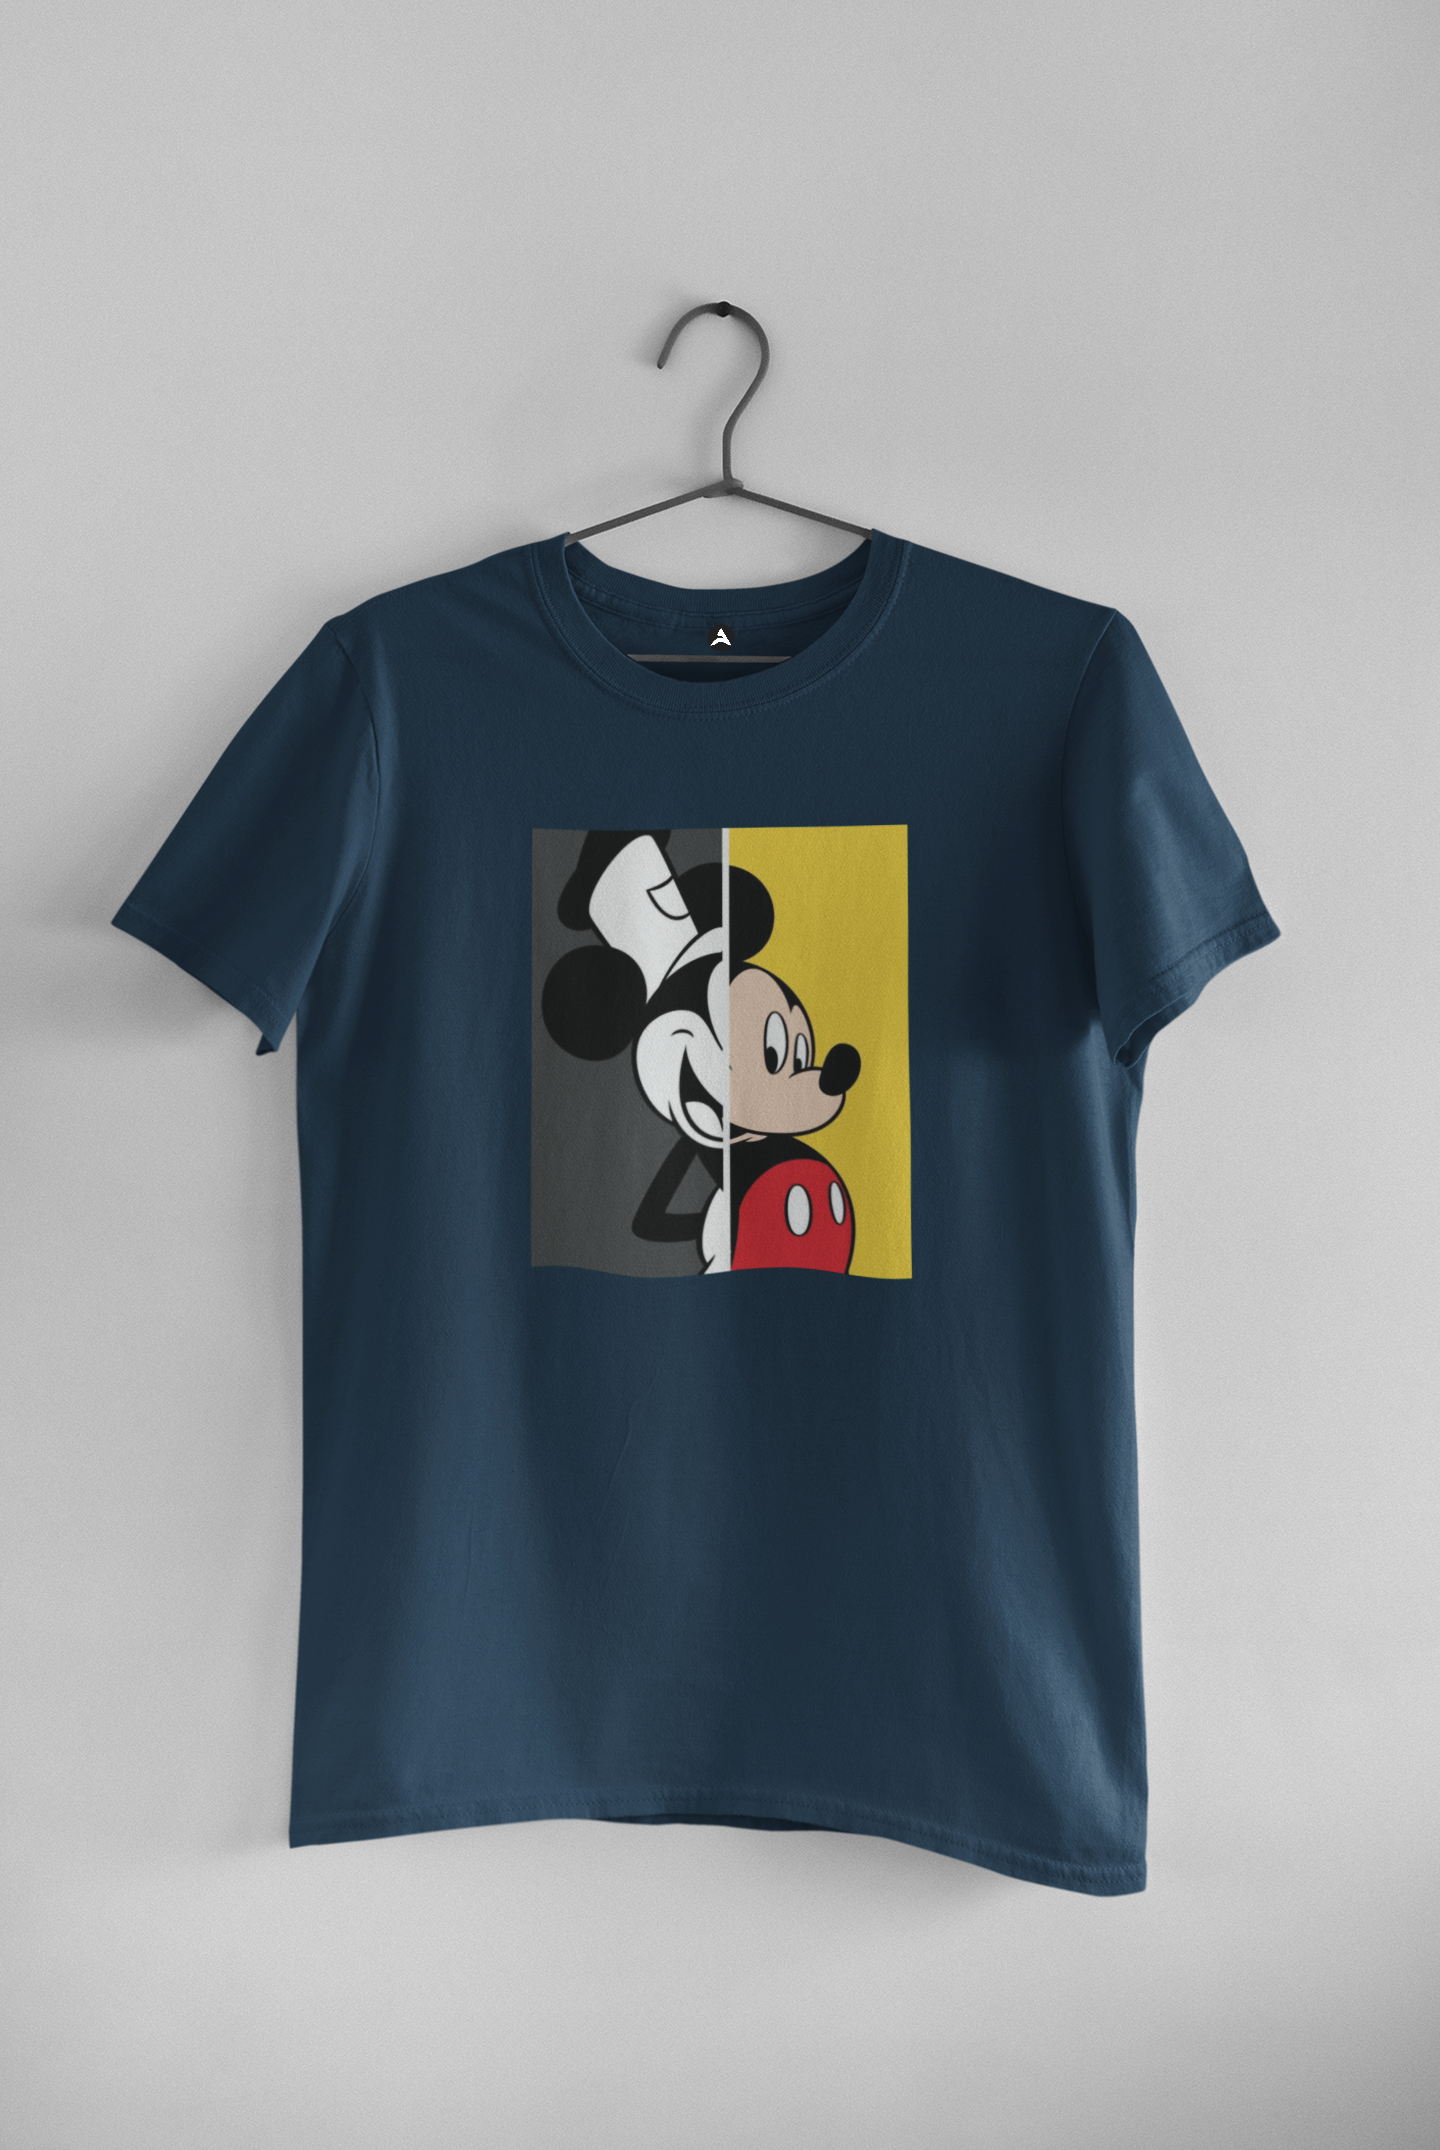 Mickey and Minnie- HALF-SLEEVE T-SHIRTS NAVY BLUE